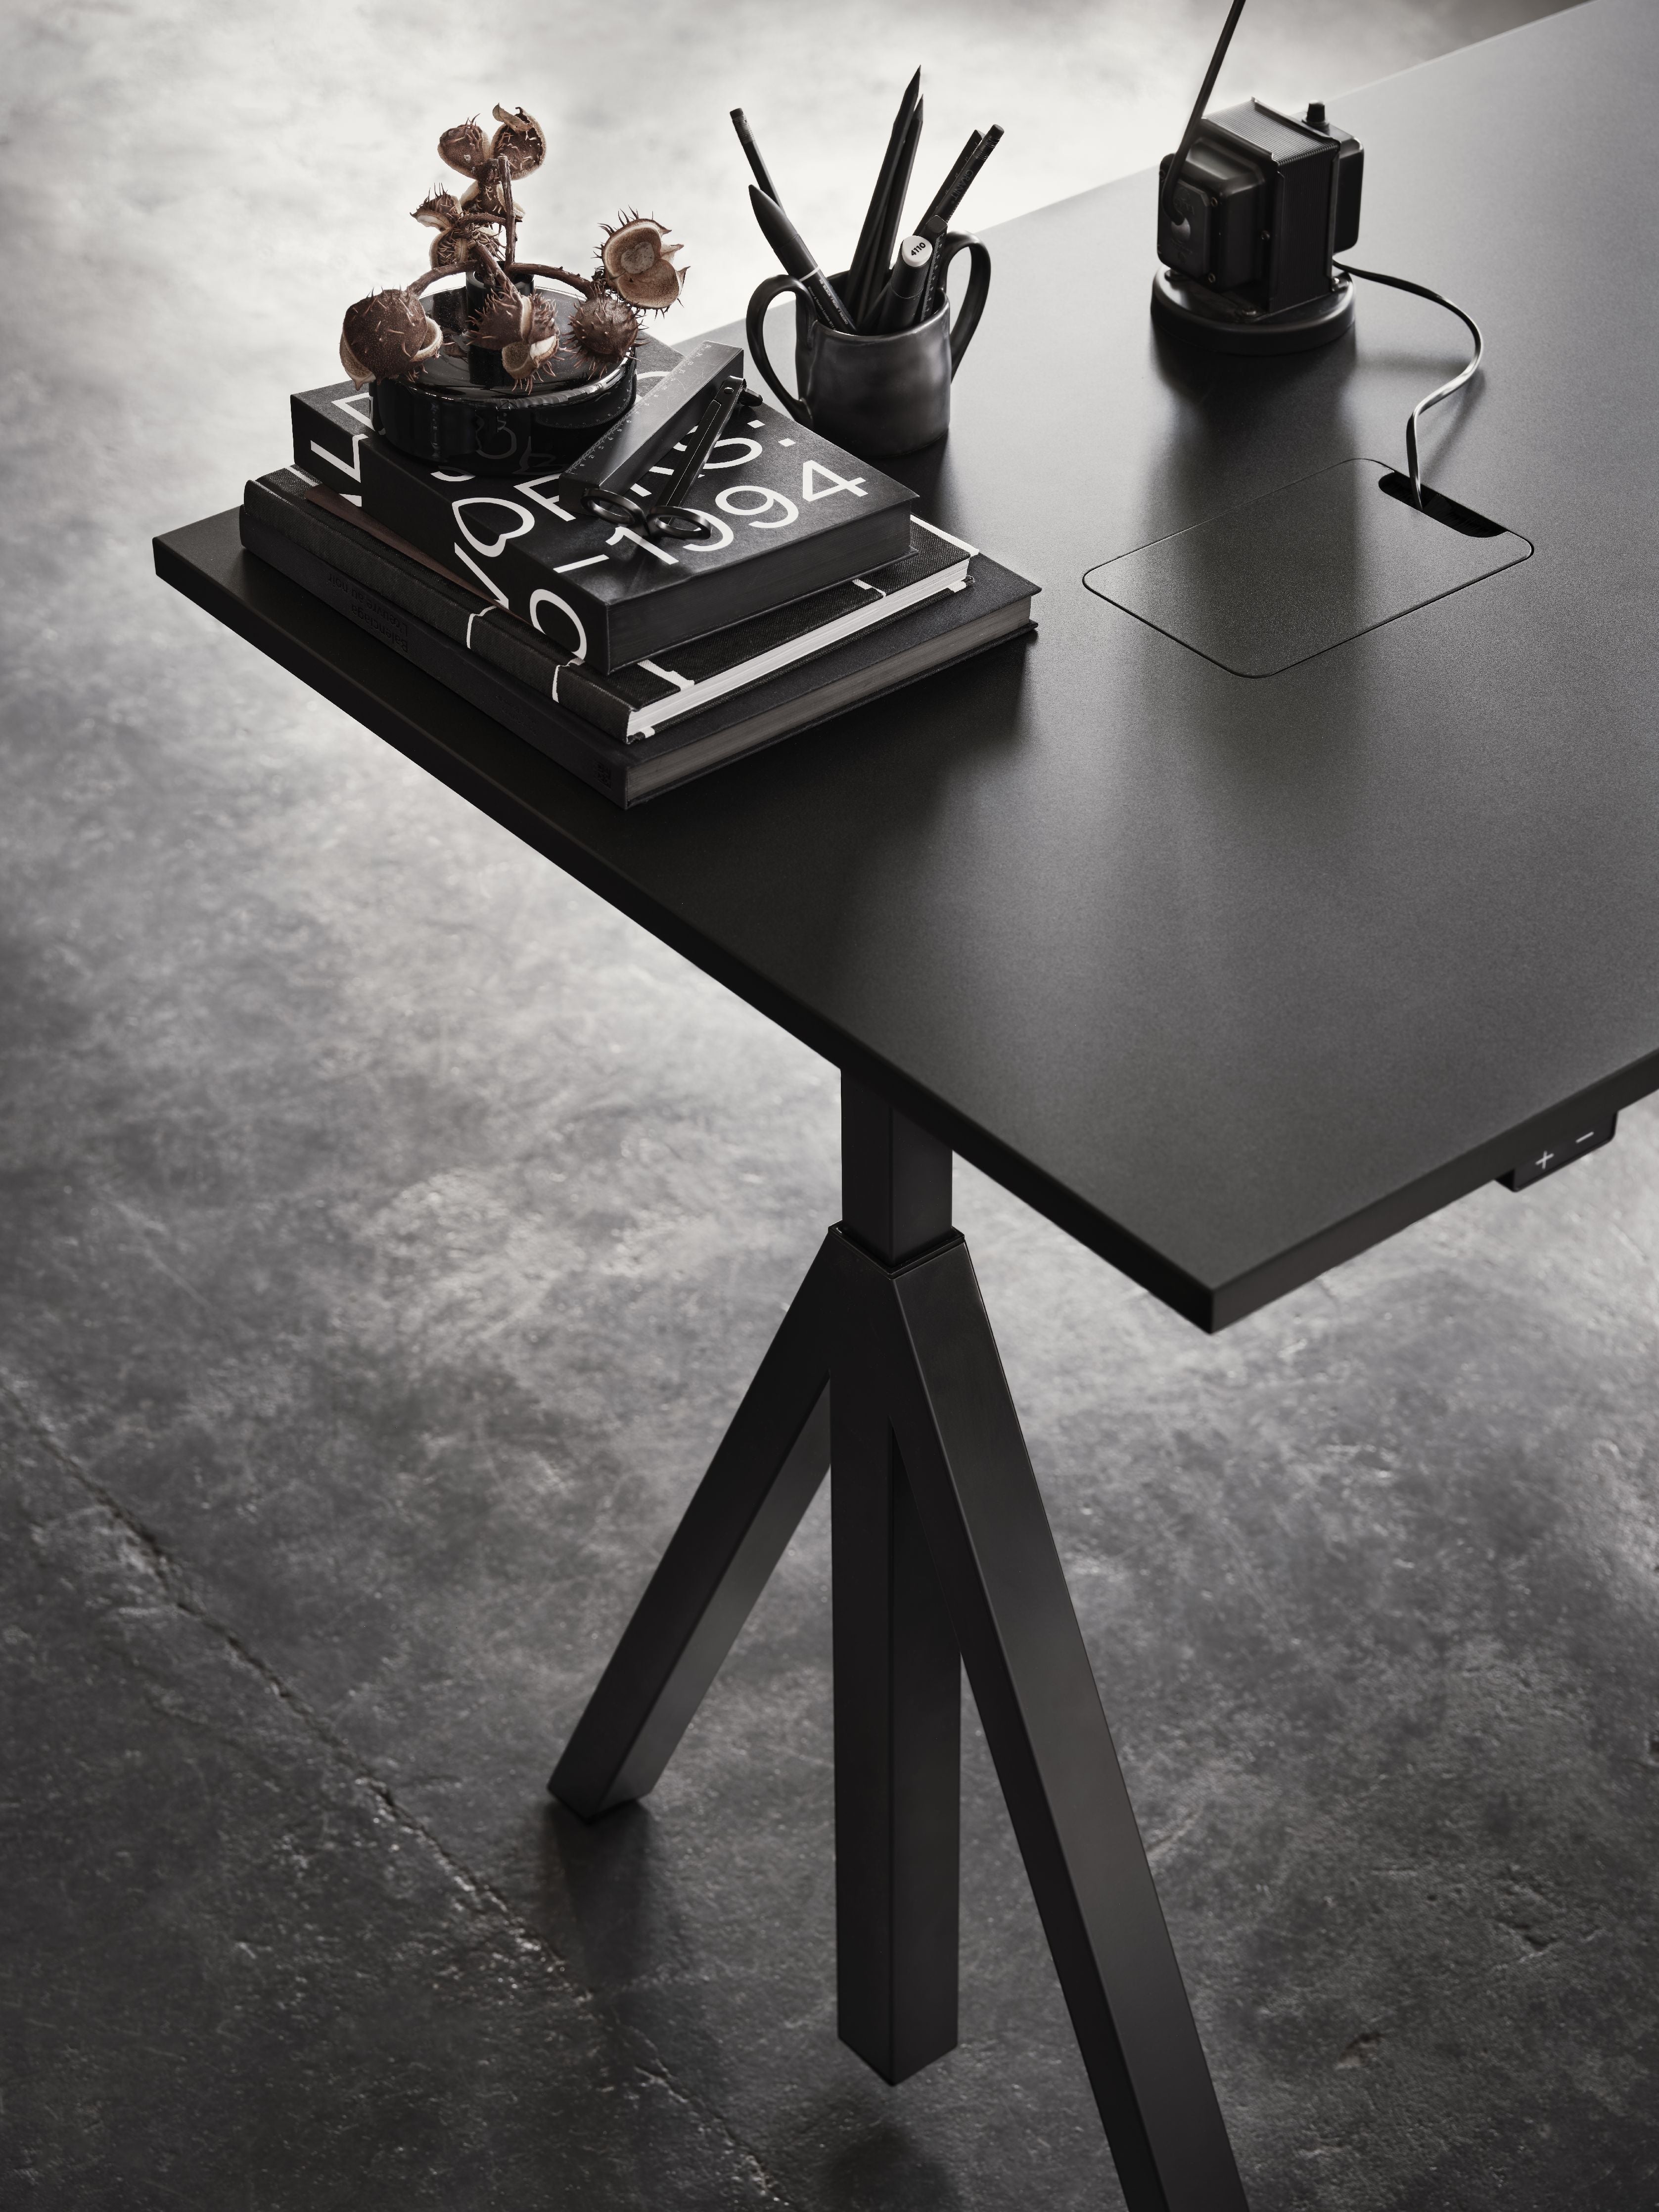 String Furniture Works Work Table 78x160 Cm, Black/Black